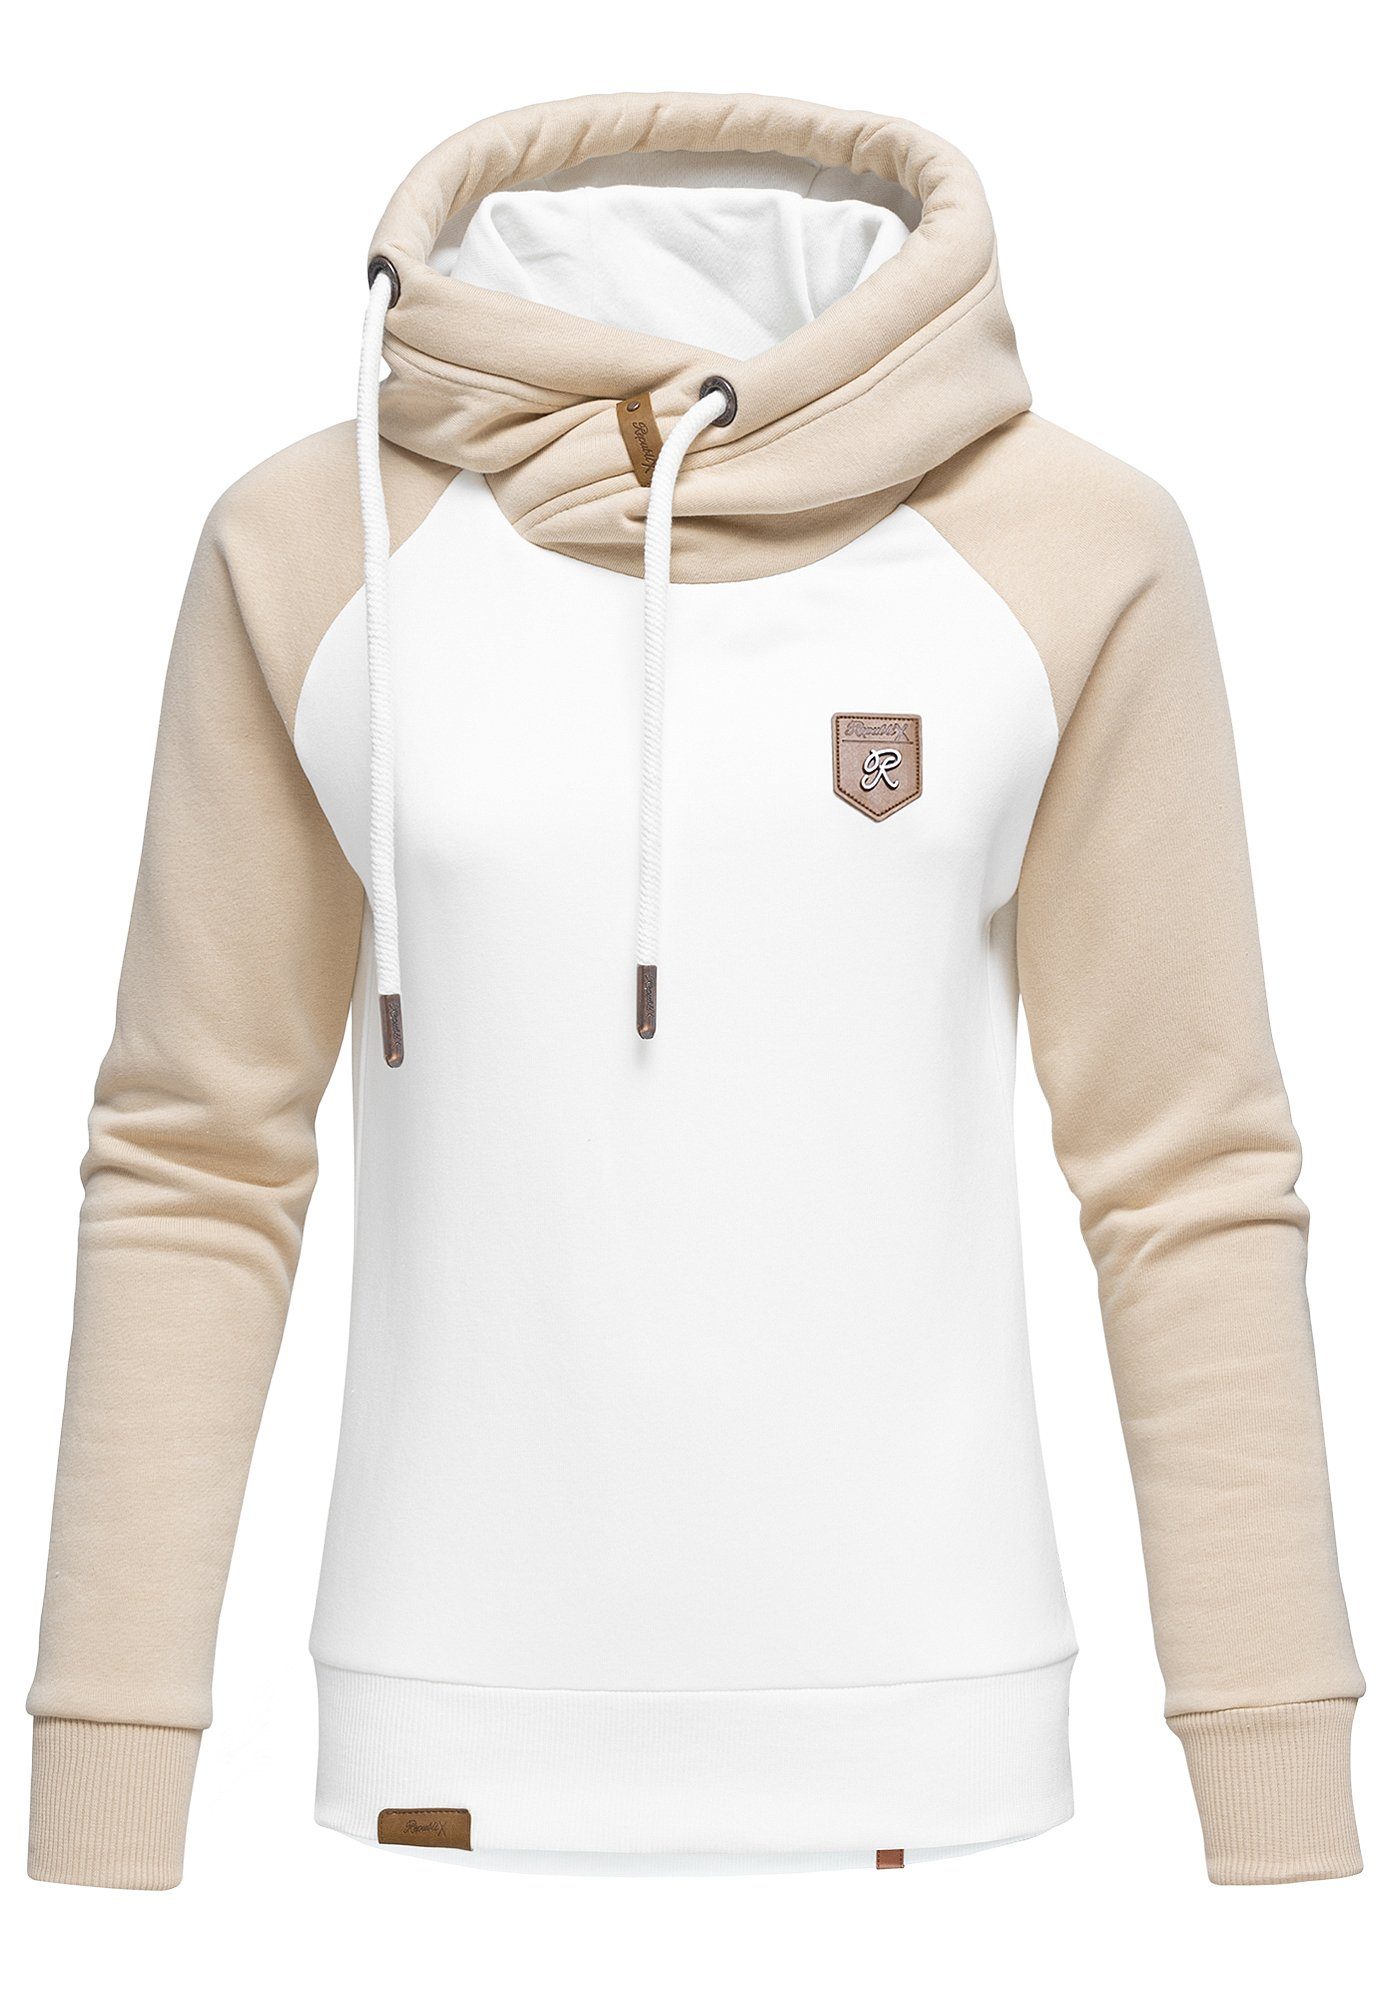 REPUBLIX Sweatshirt RILEY Damen Kapuzenpullover Sweatjacke Pullover Hoodie Weiß/Beige